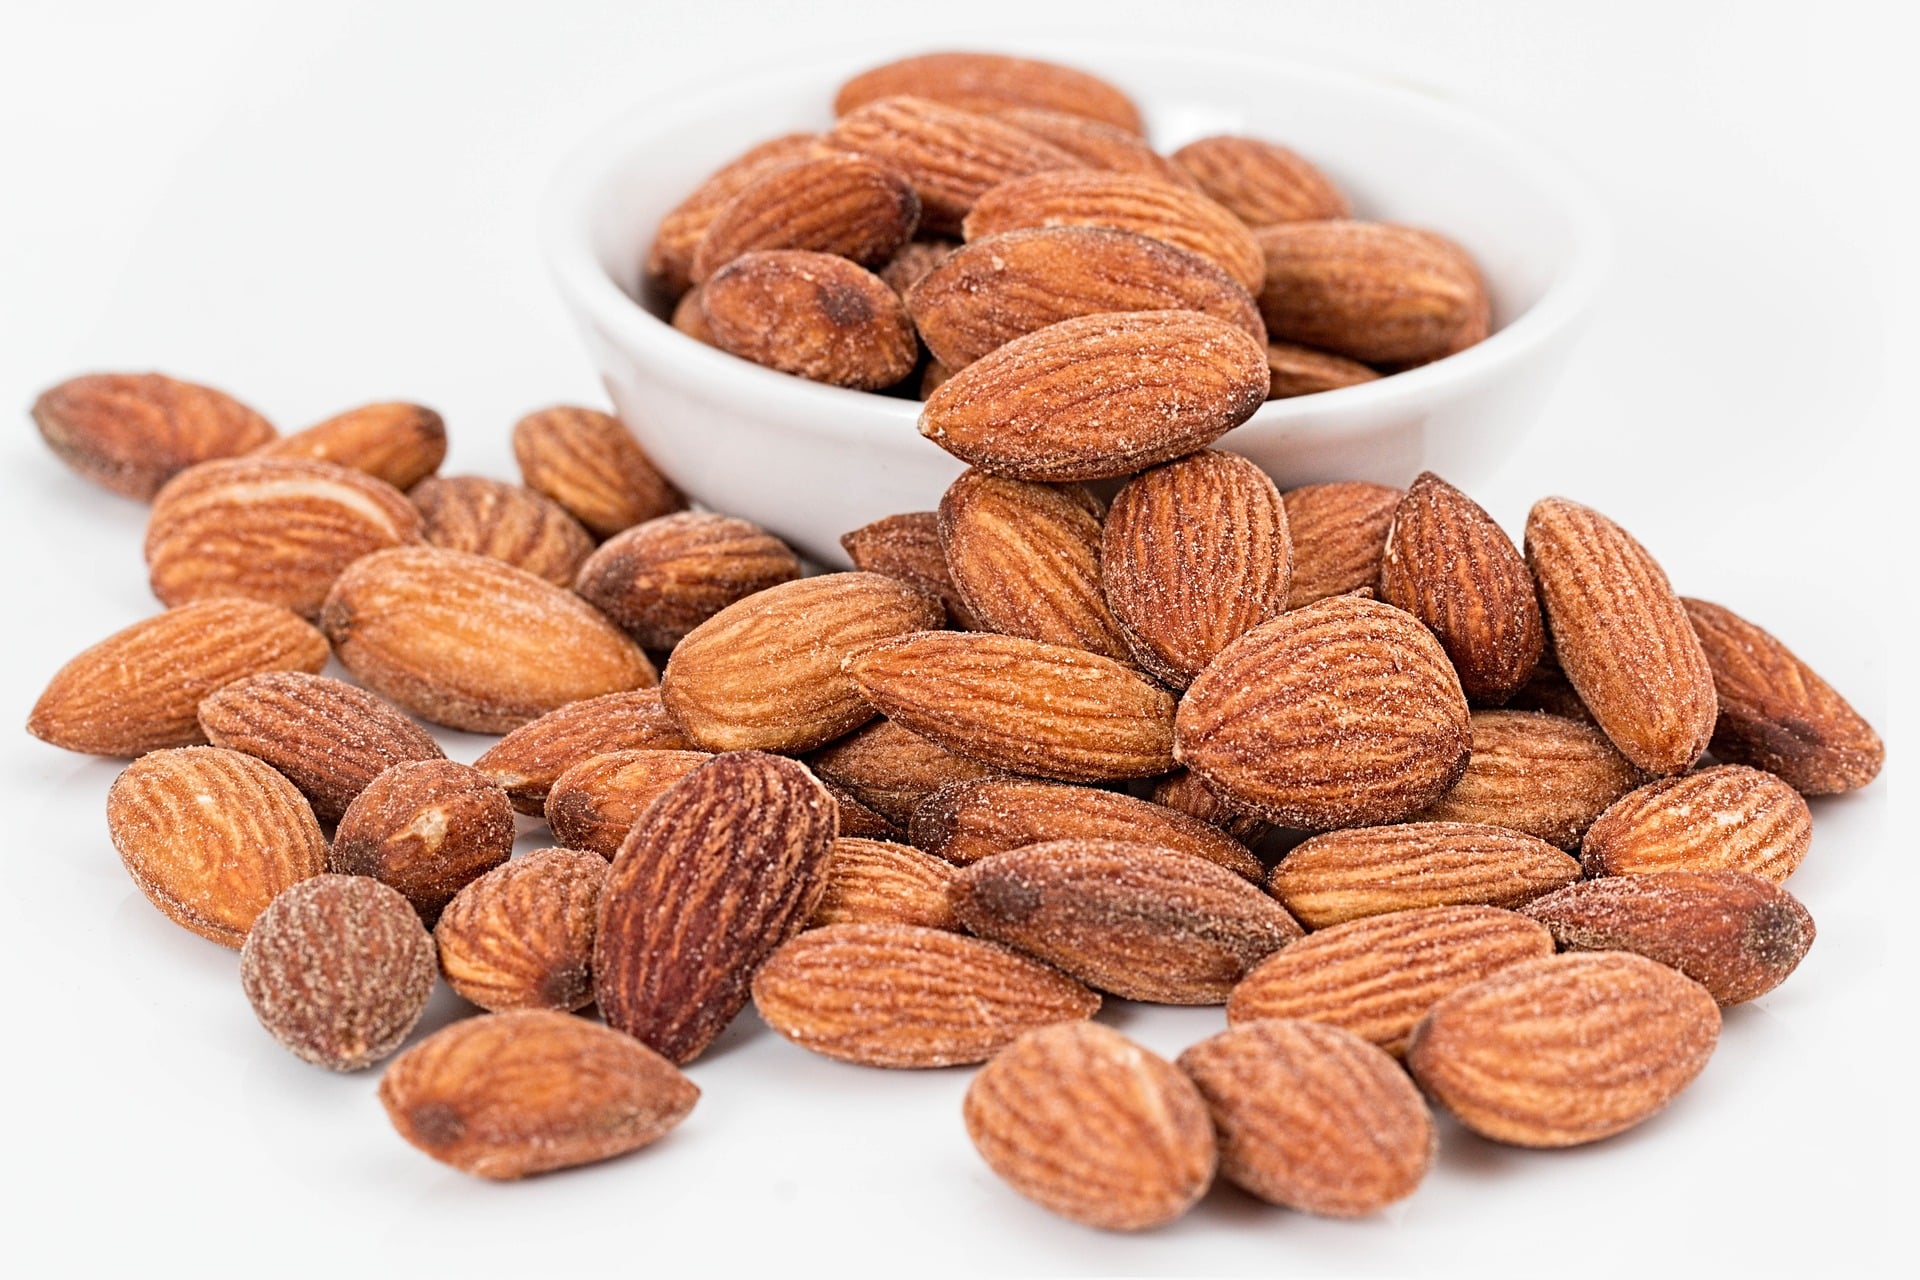 almond benefits for brain